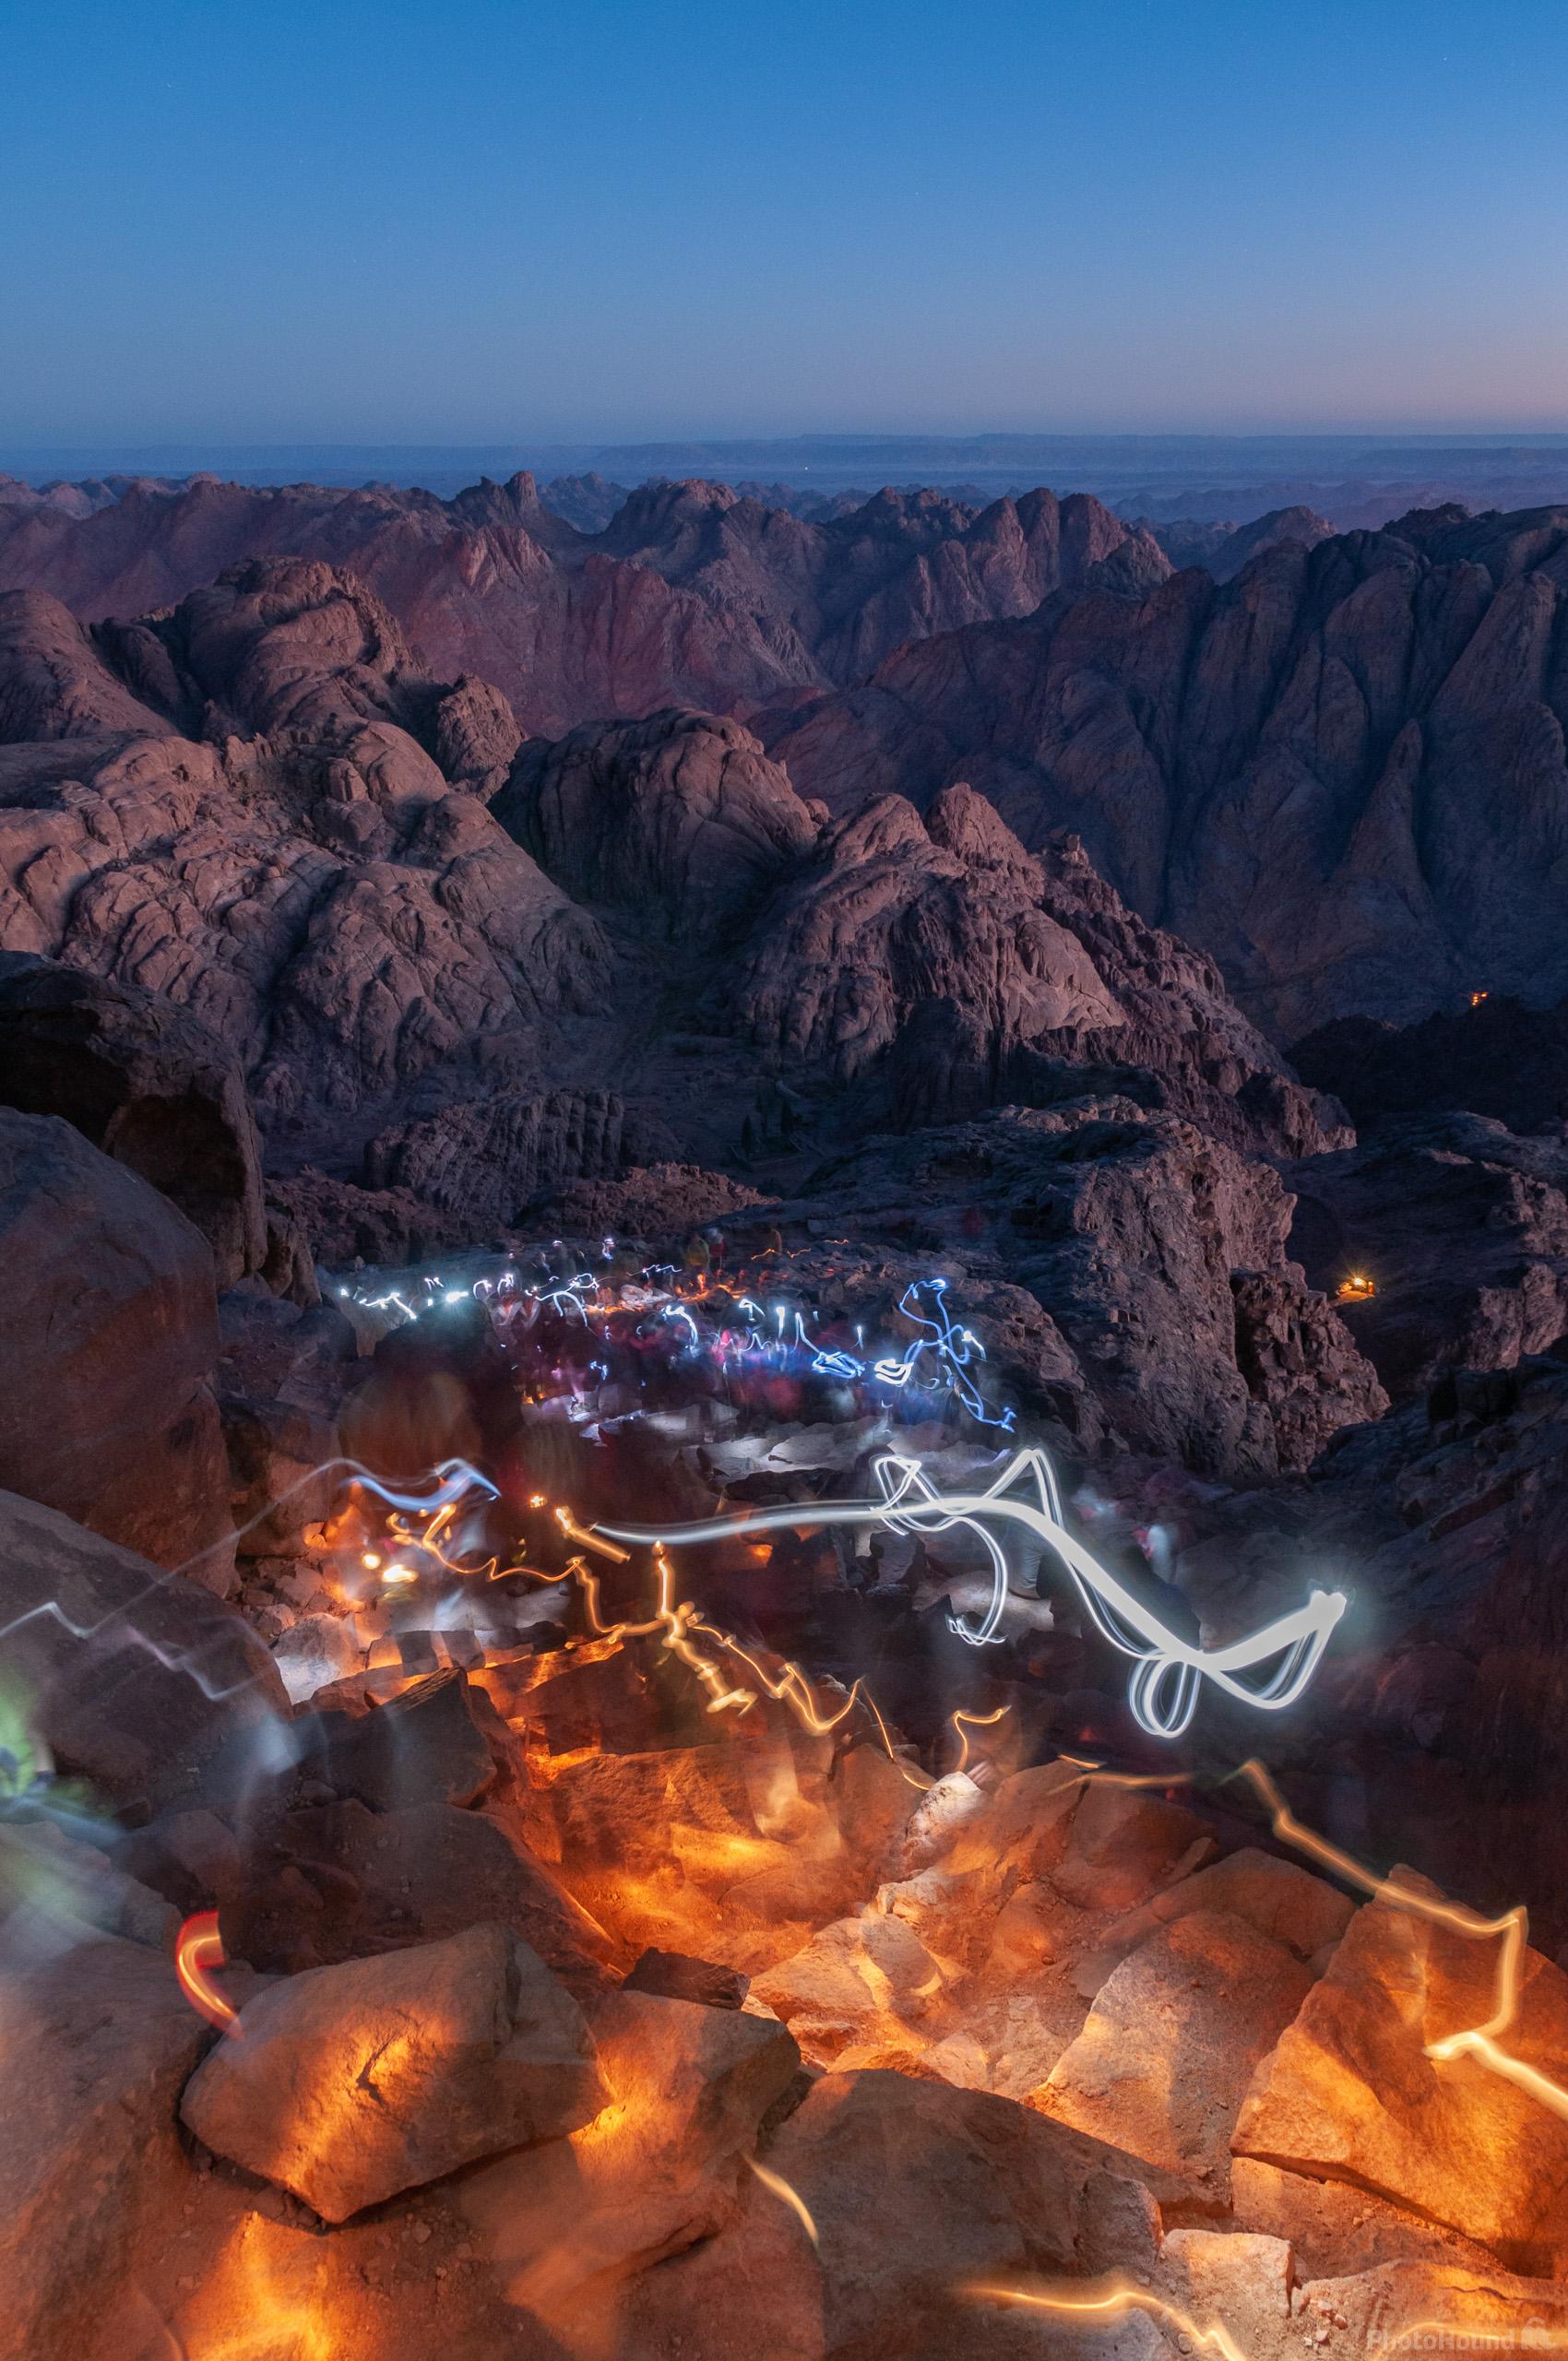 Image of Mount Sinai - The Camel Trail by Luka Esenko